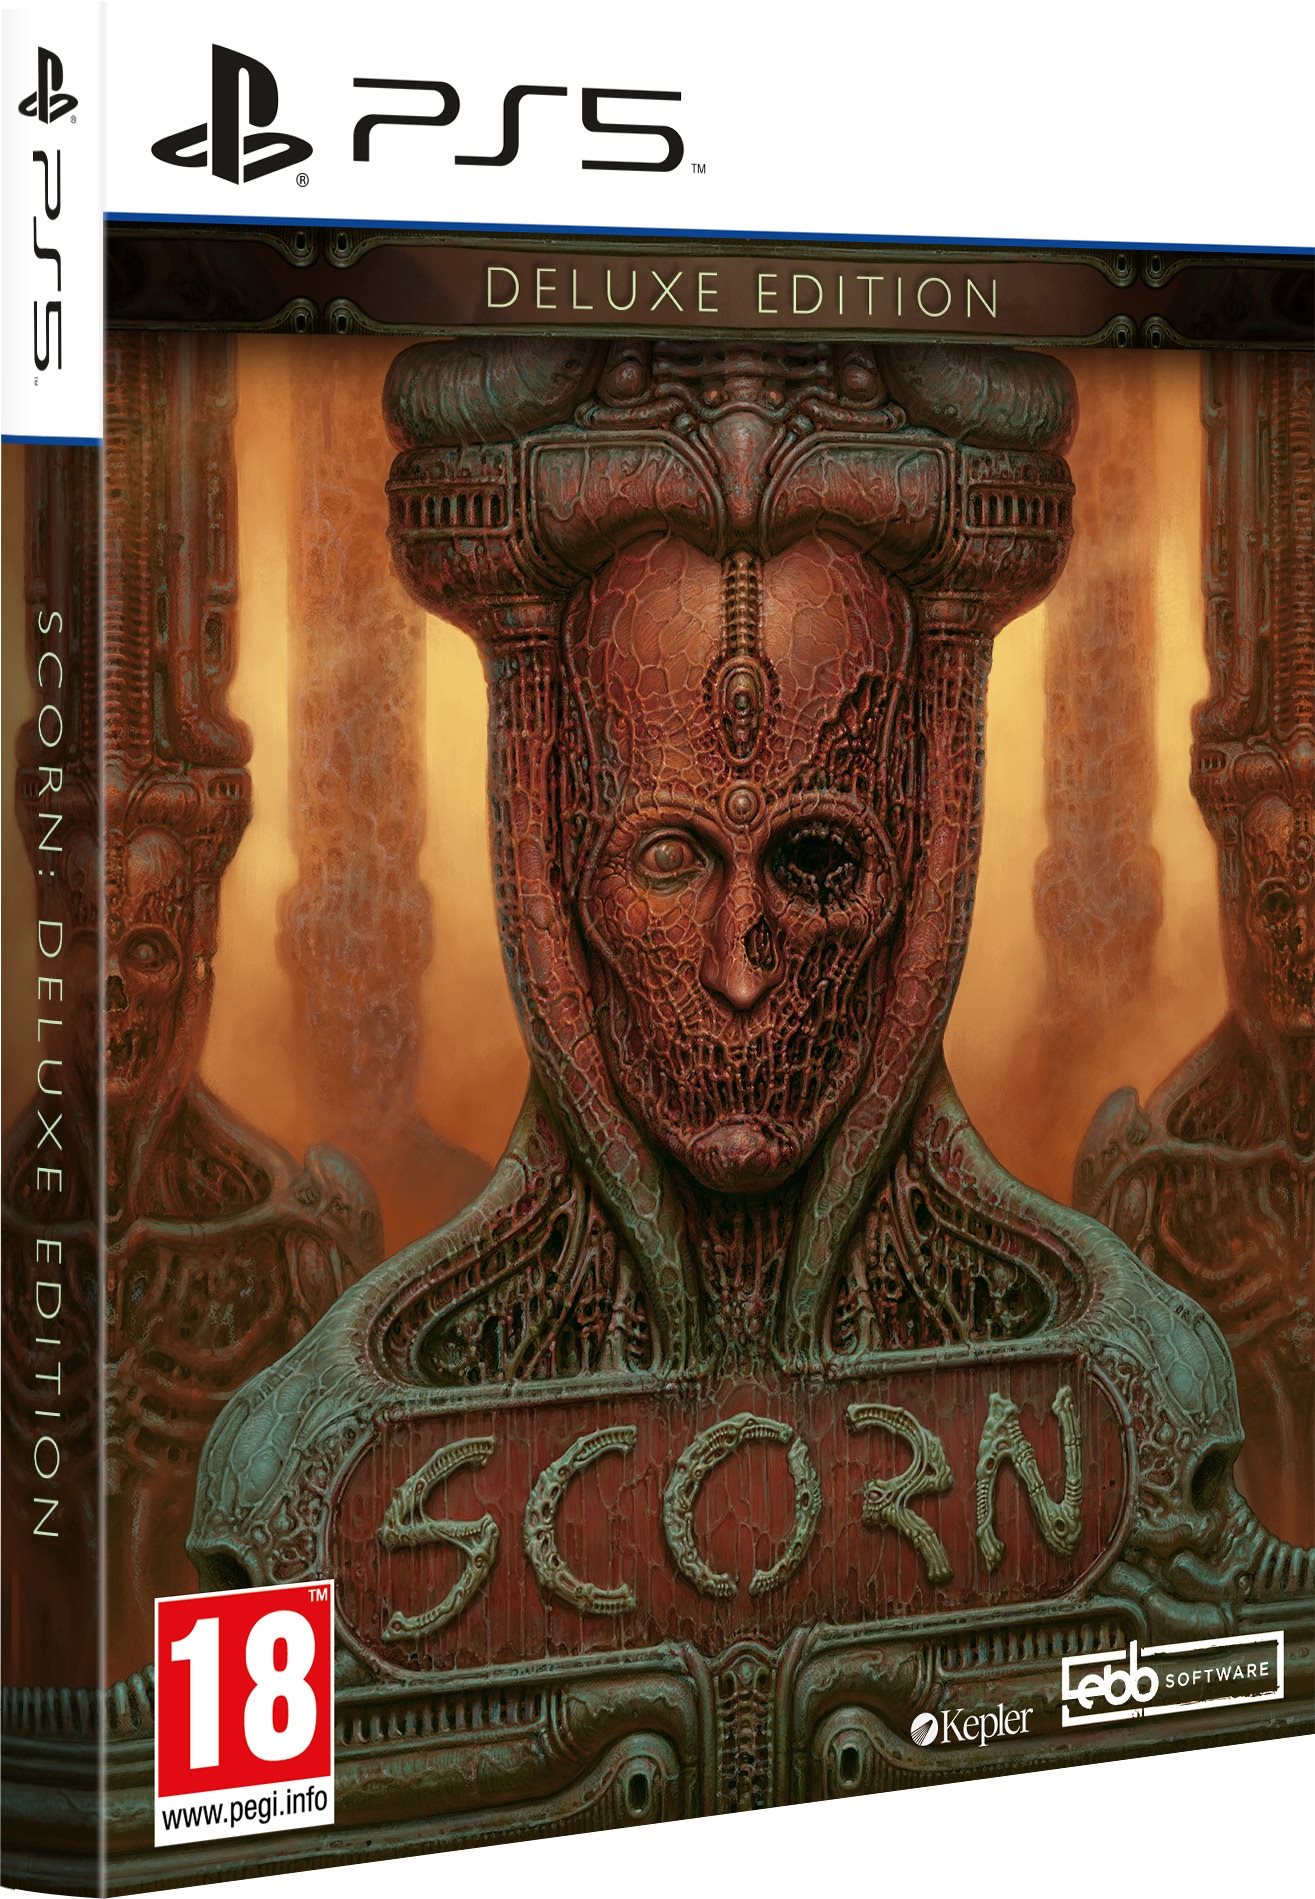 Scorn: Deluxe Edition - PS5